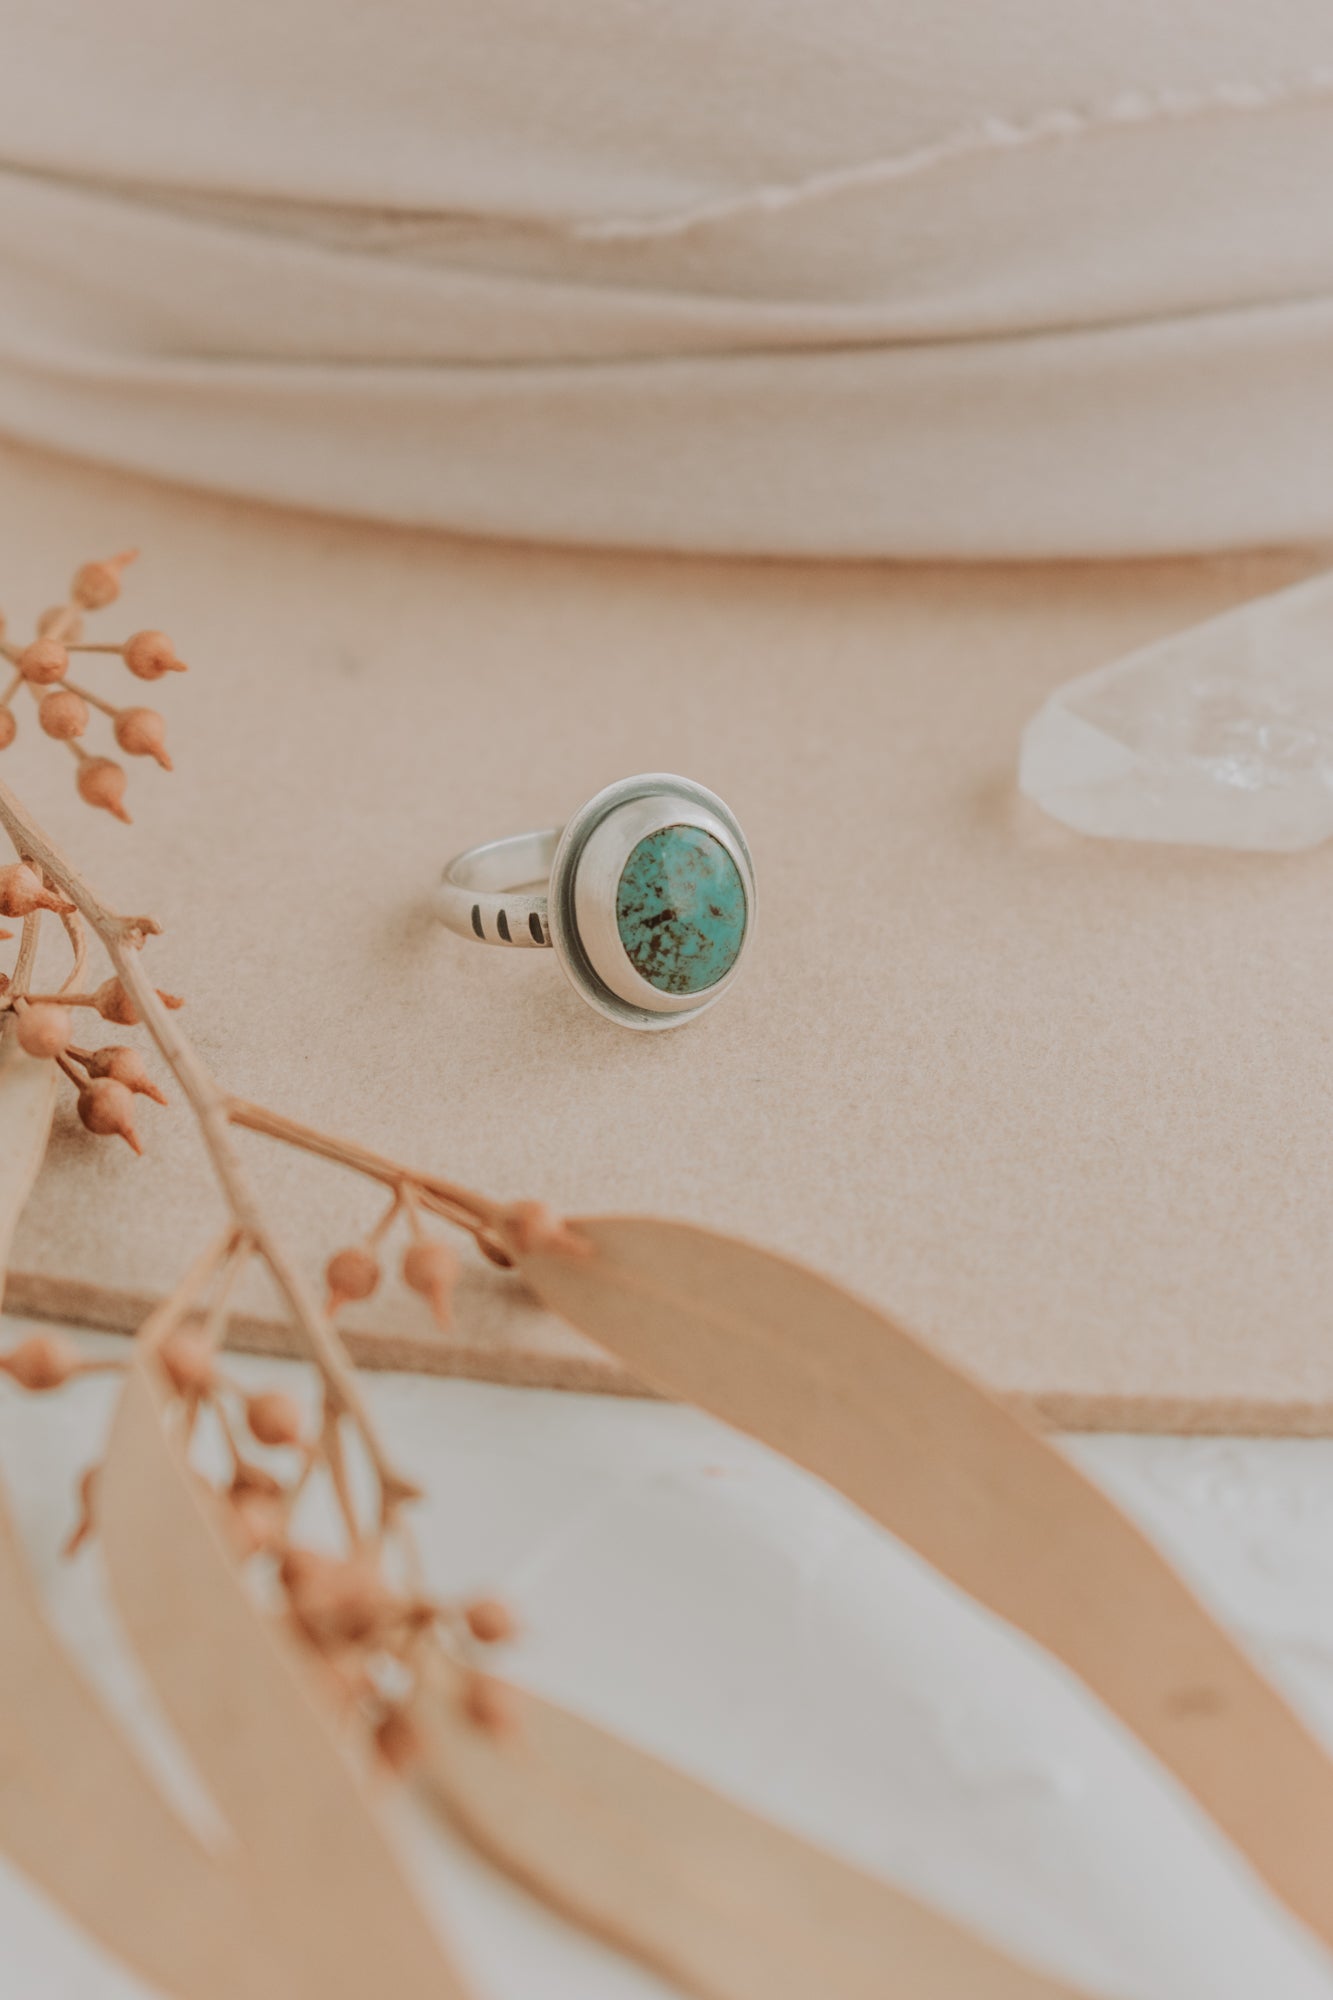 Turquoise Oval Ring - Size 5.75 - Third Hand Silversmith LLC handmade jewelry, Bozeman, Montana